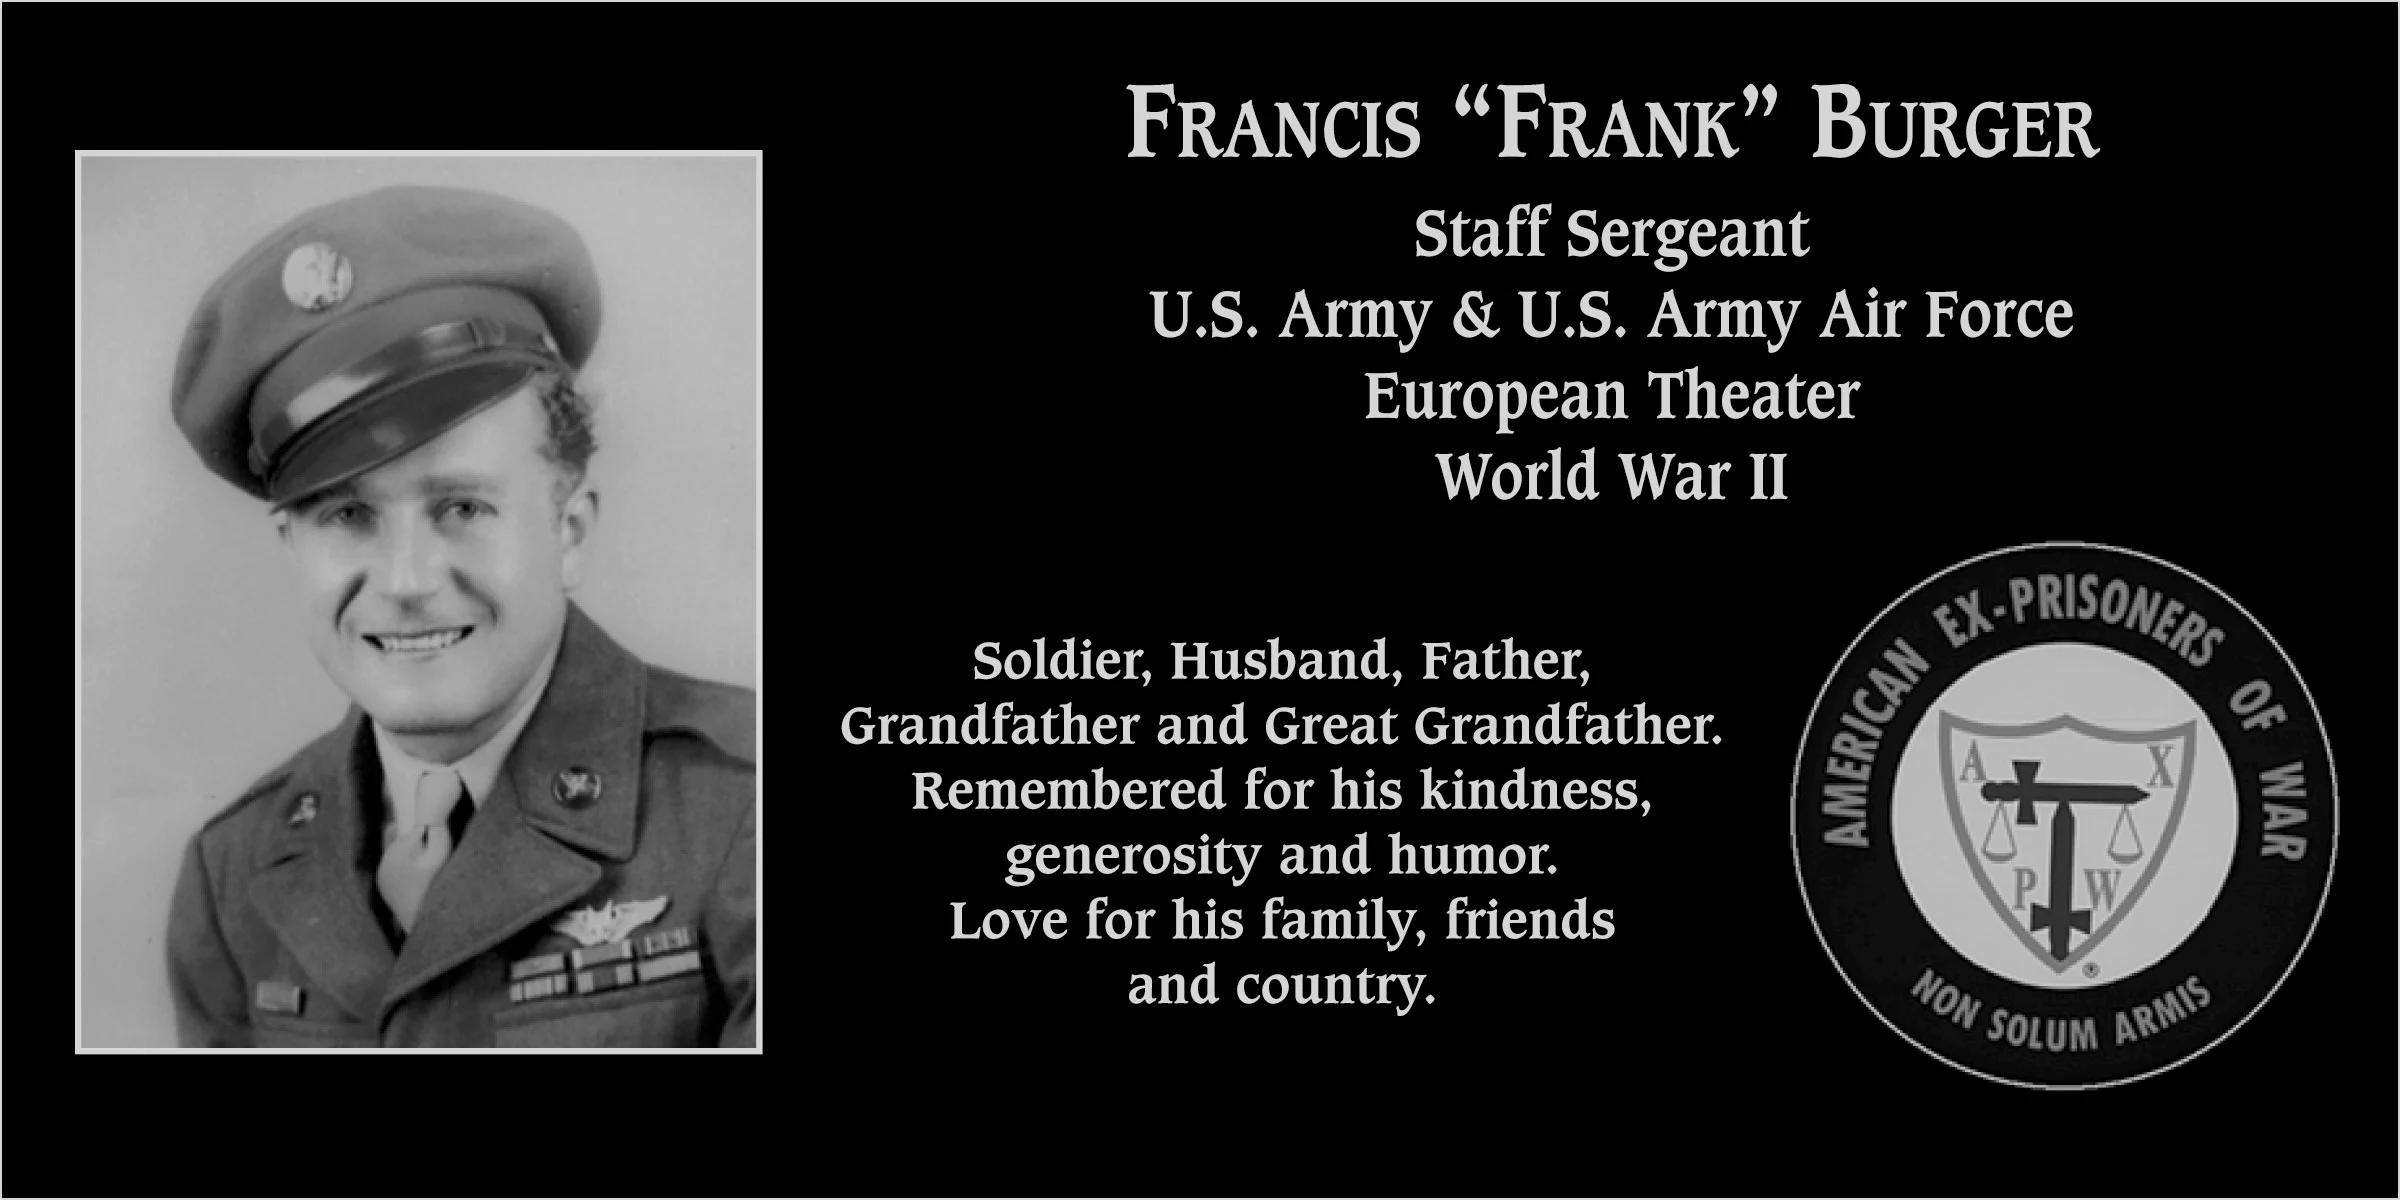 Francis “Frank” Burger